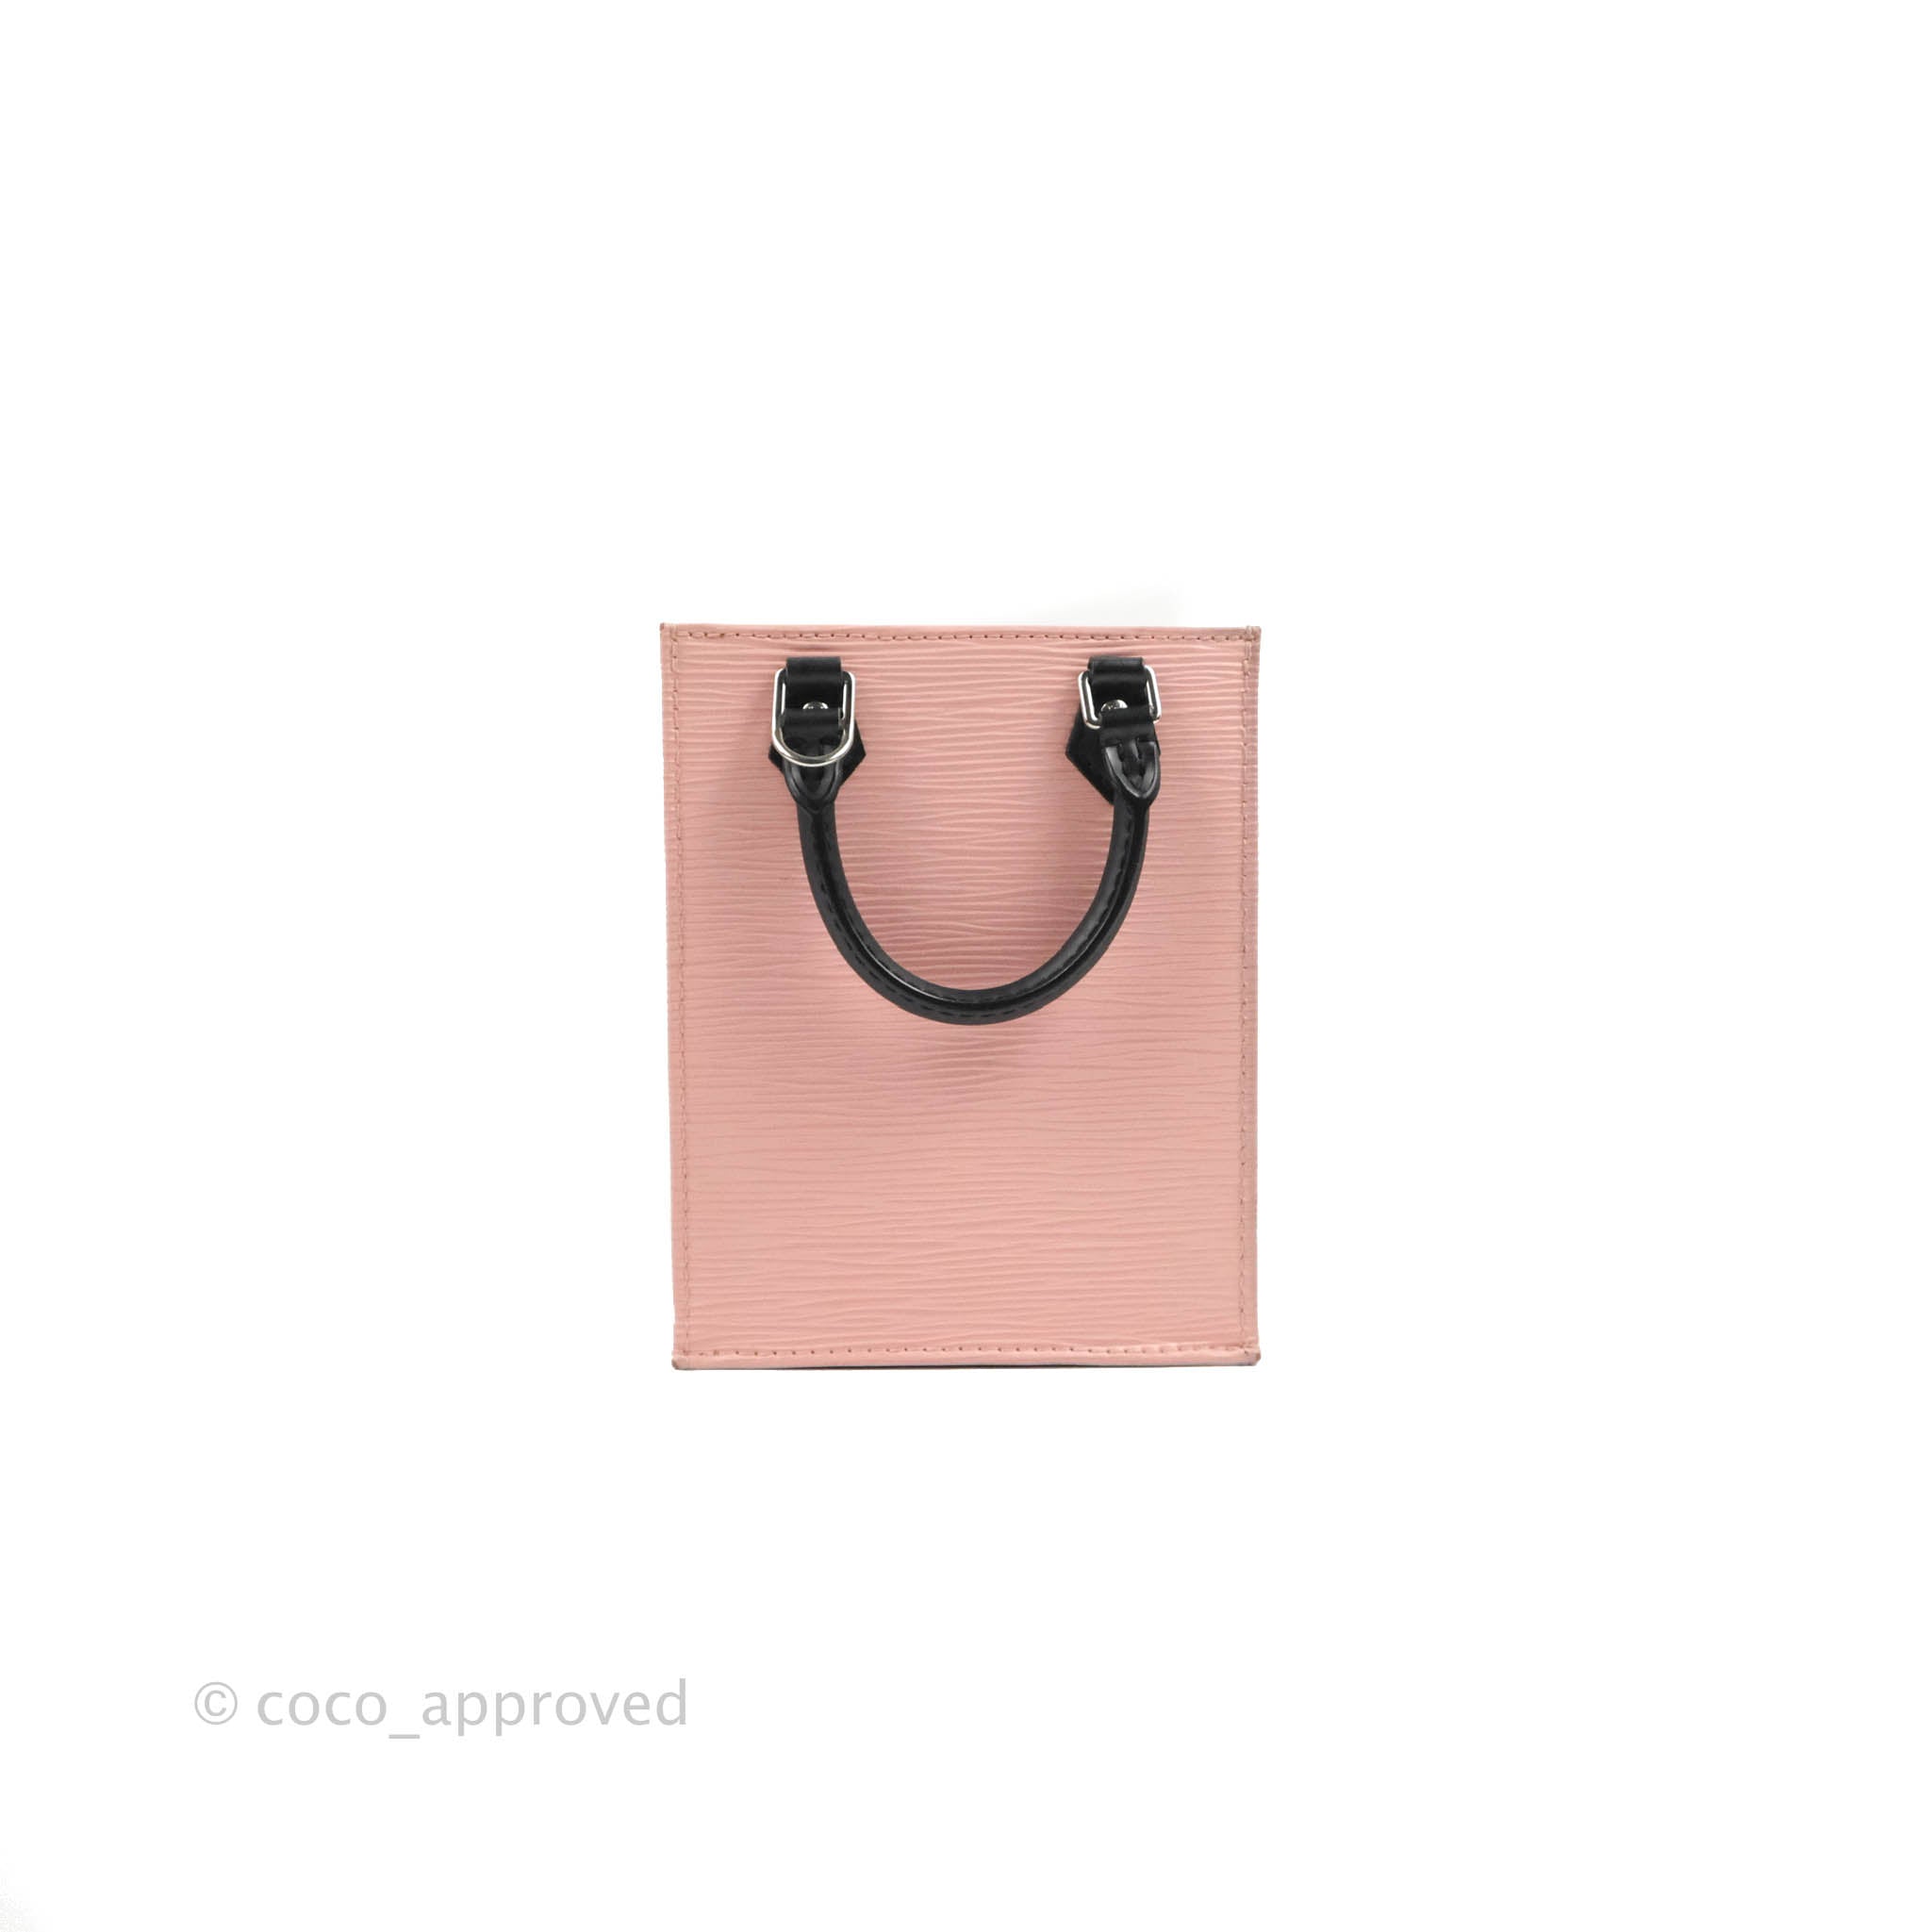 Lv Petit Sac Plat Monogram Vernis Leather Hot Pink